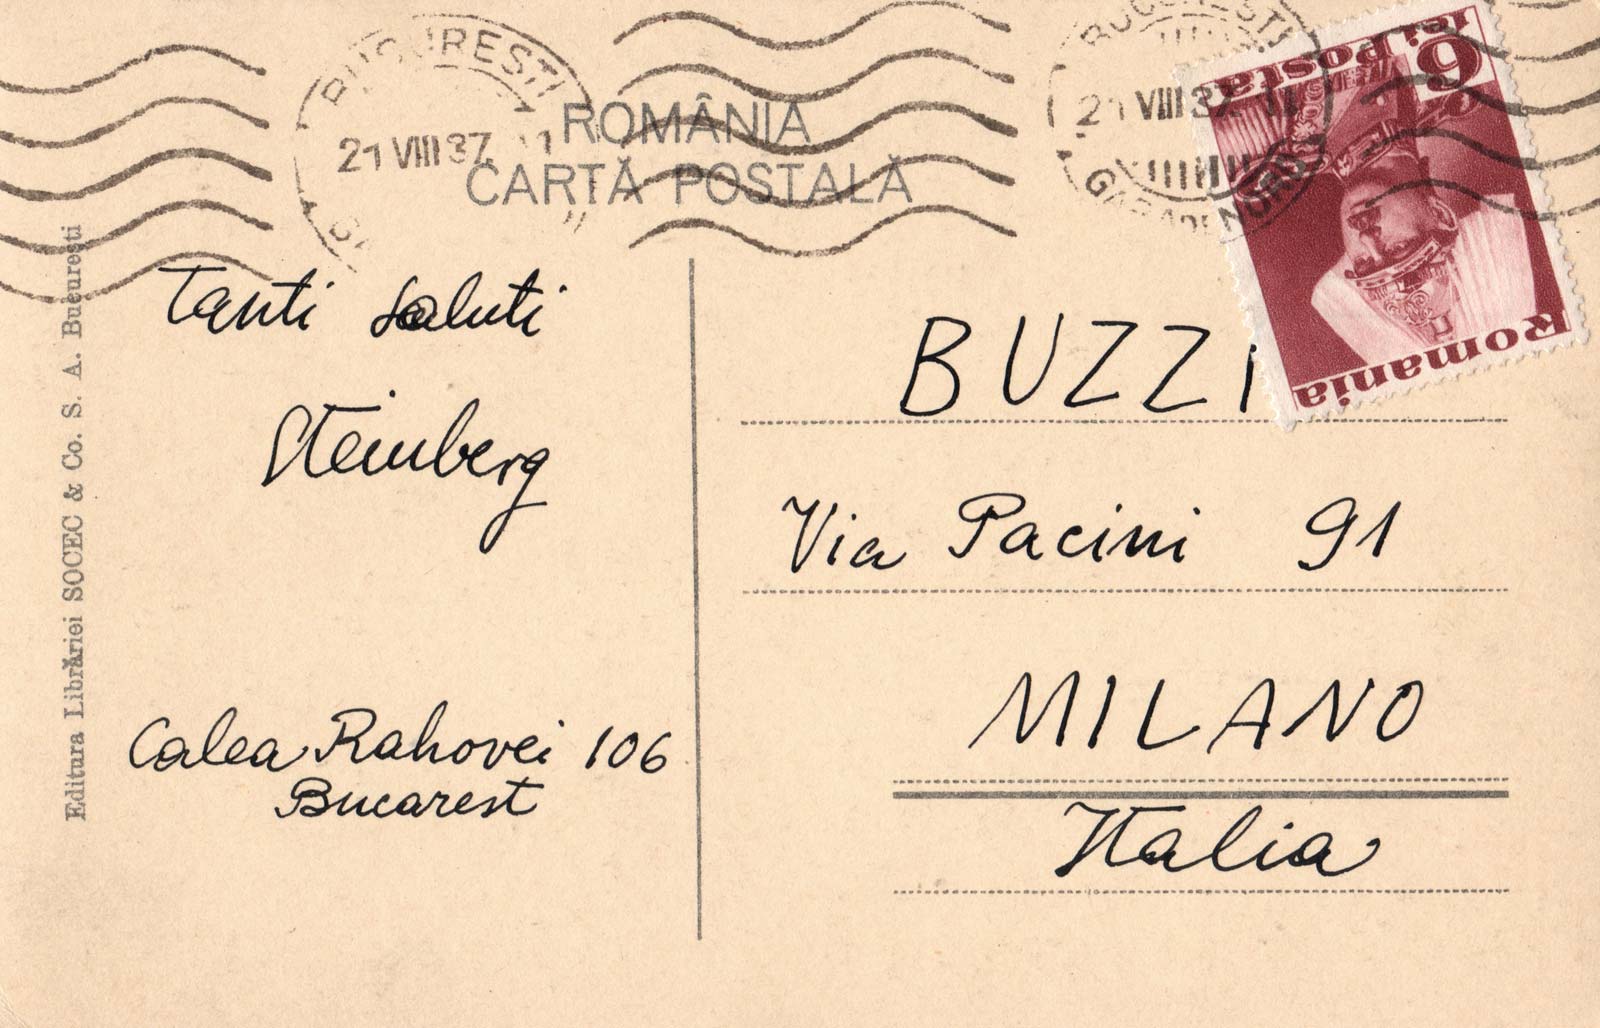 Postcard sent to Aldo Buzzi from Bucharest, August 21, 1937. The Saul Steinberg Foundation.